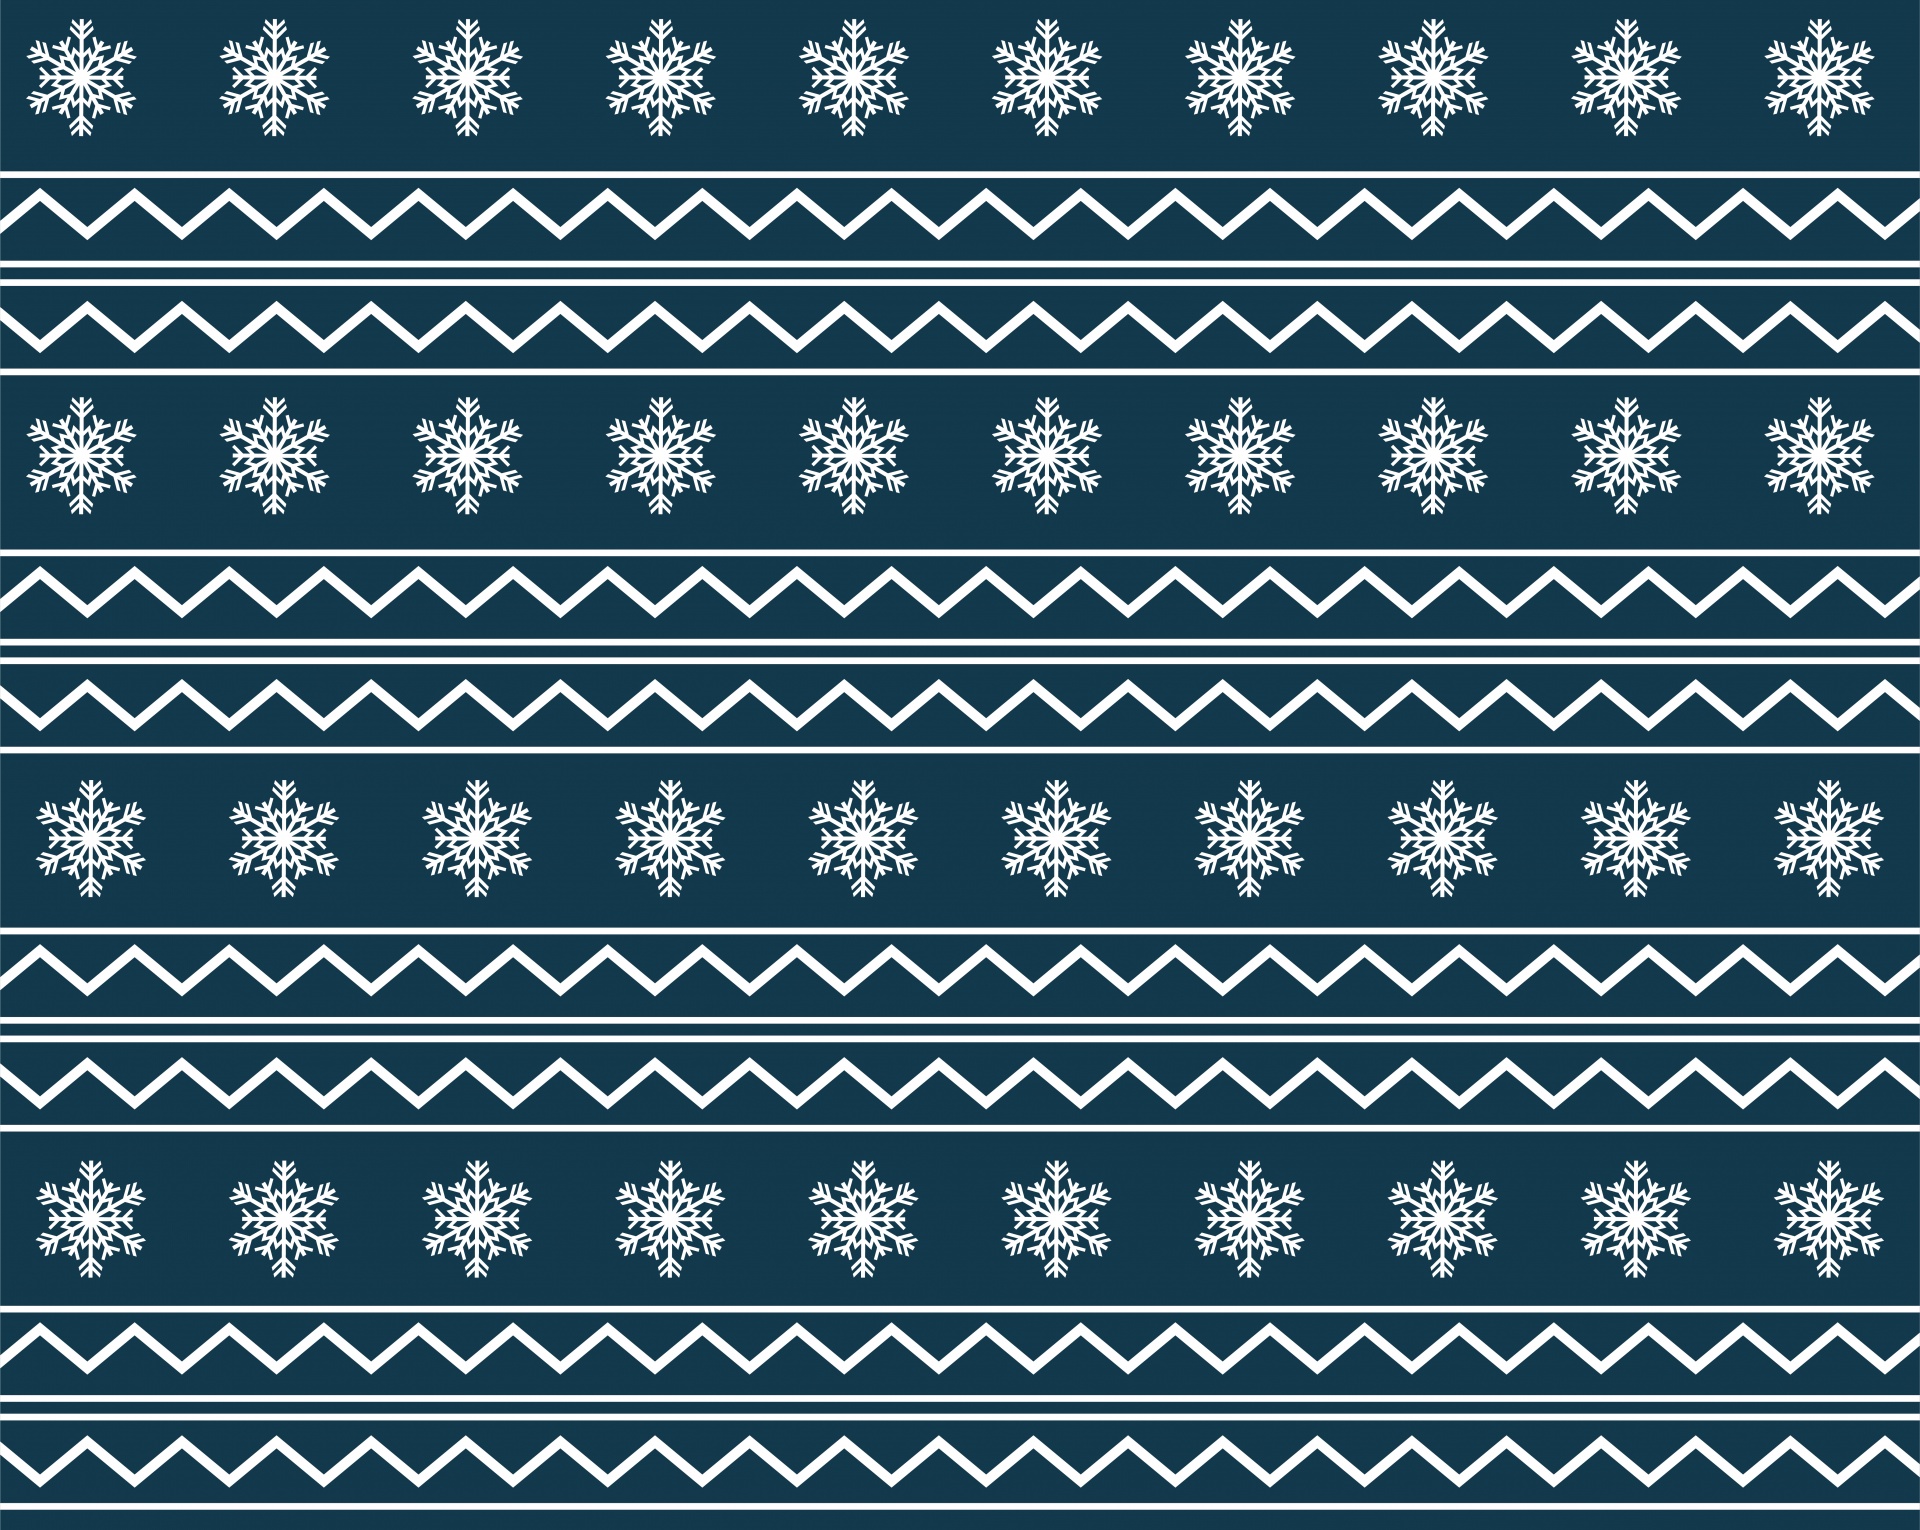 Fabric winter pattern